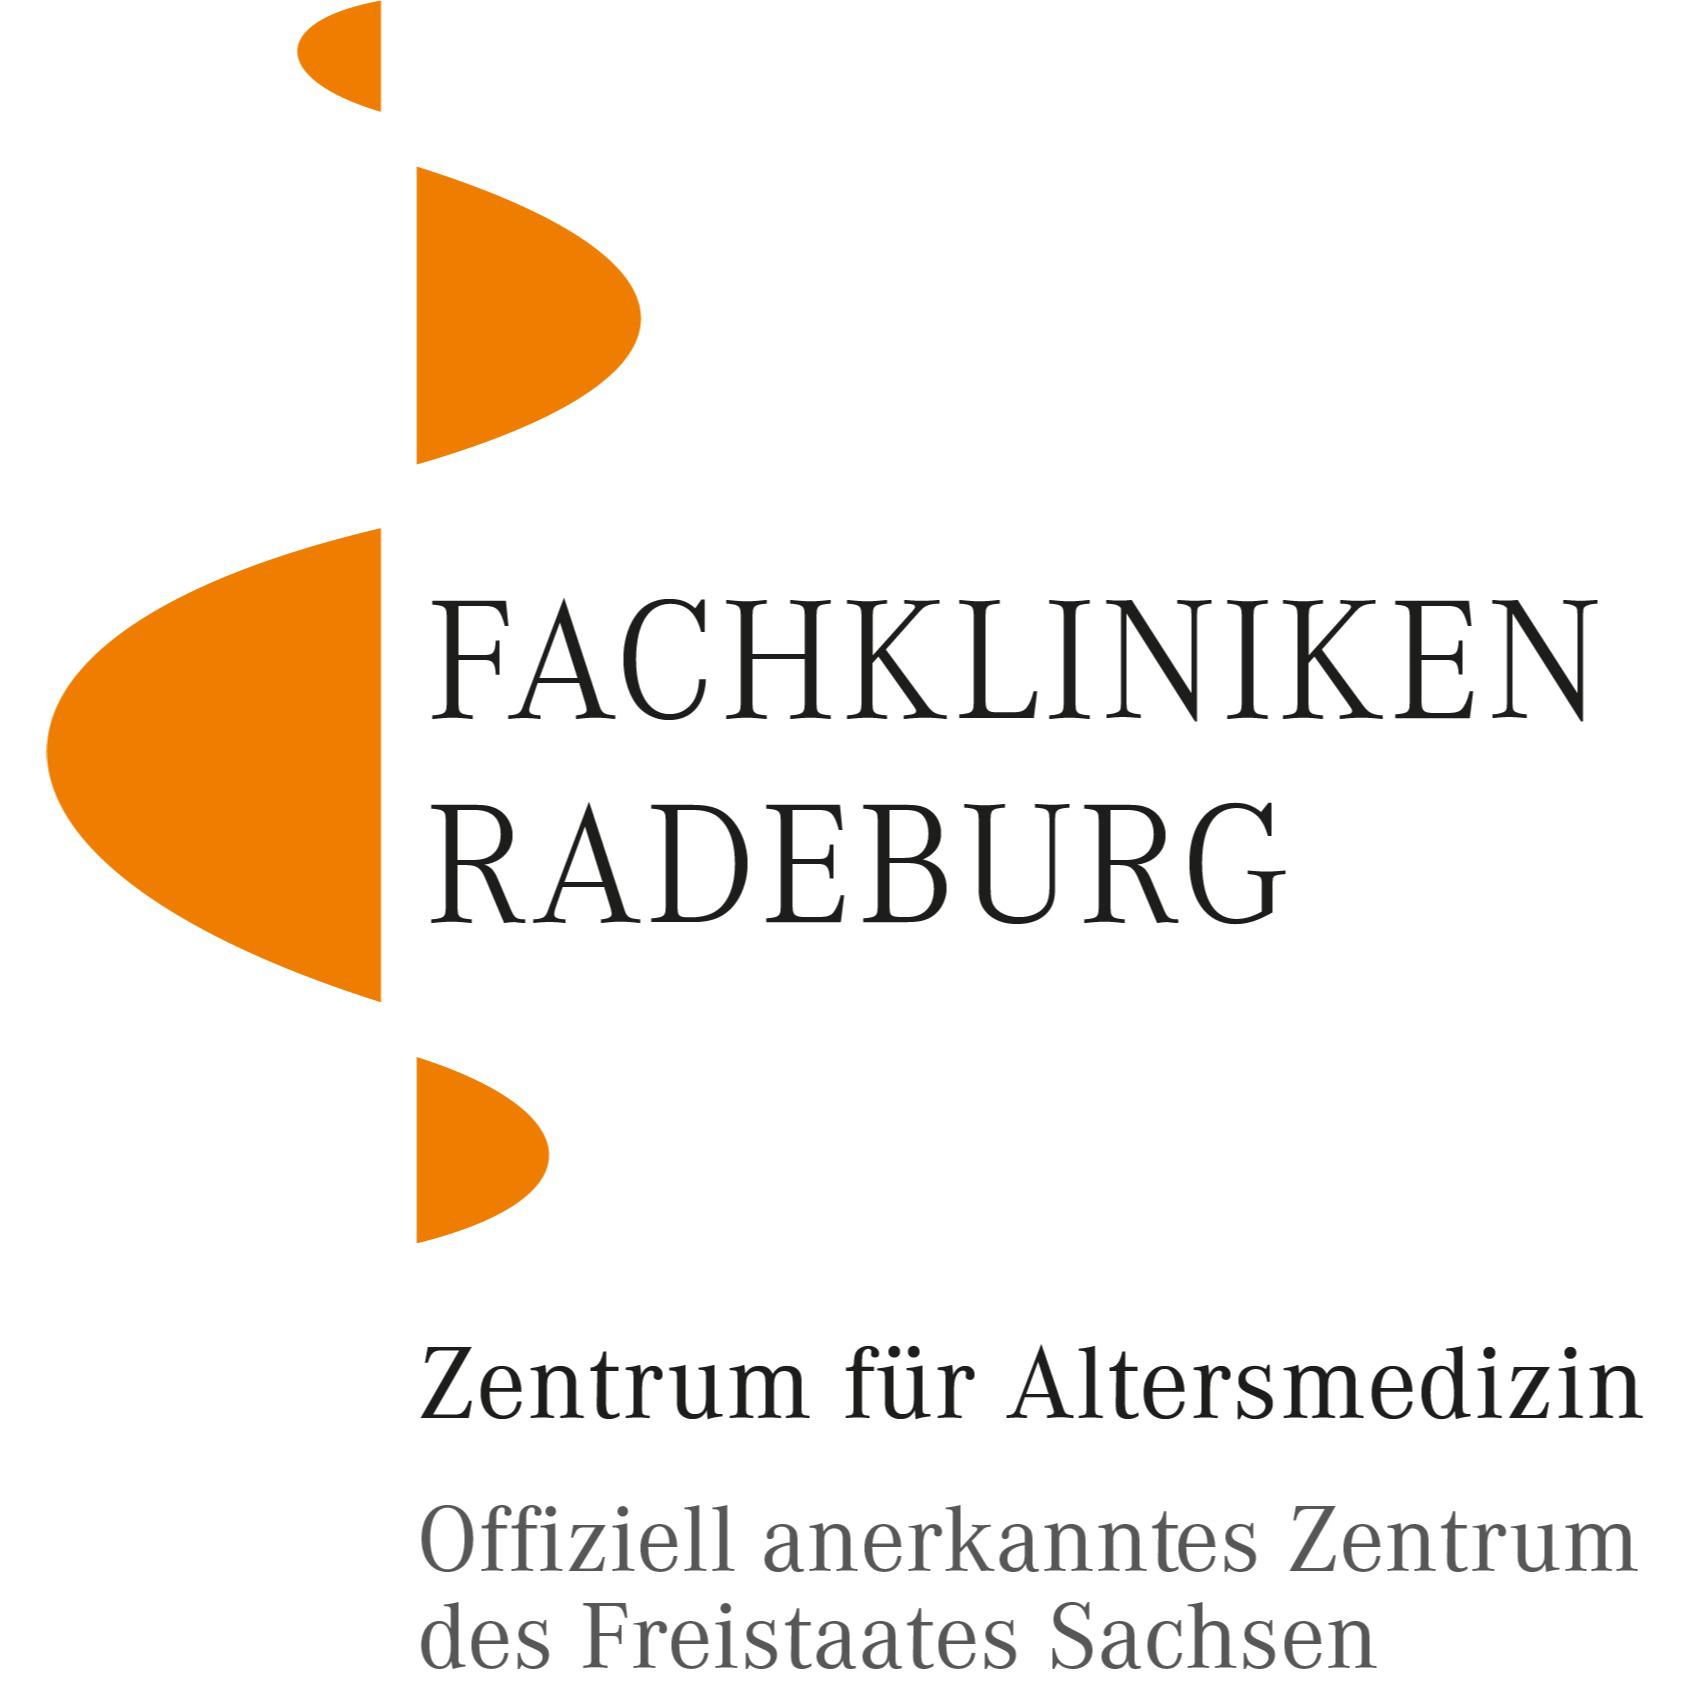 Fachkliniken Radeburg in Radeburg - Logo